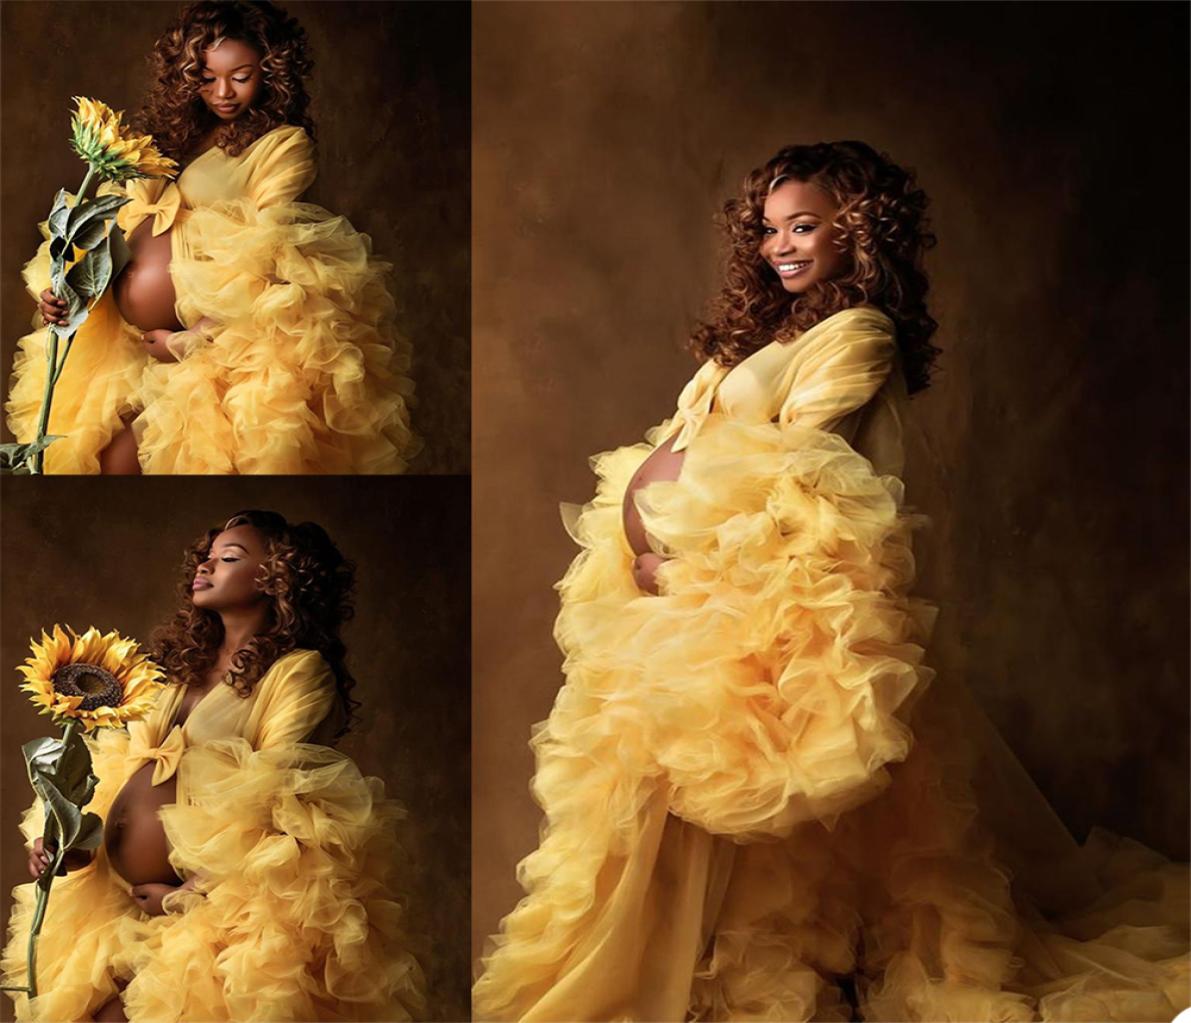 

Ruffles Night Robe Yellow Maternity Dress for Poshoot or Babyshower Po Shoot Lady Sleepwear Bathrobe Sheer Nightgown9294000